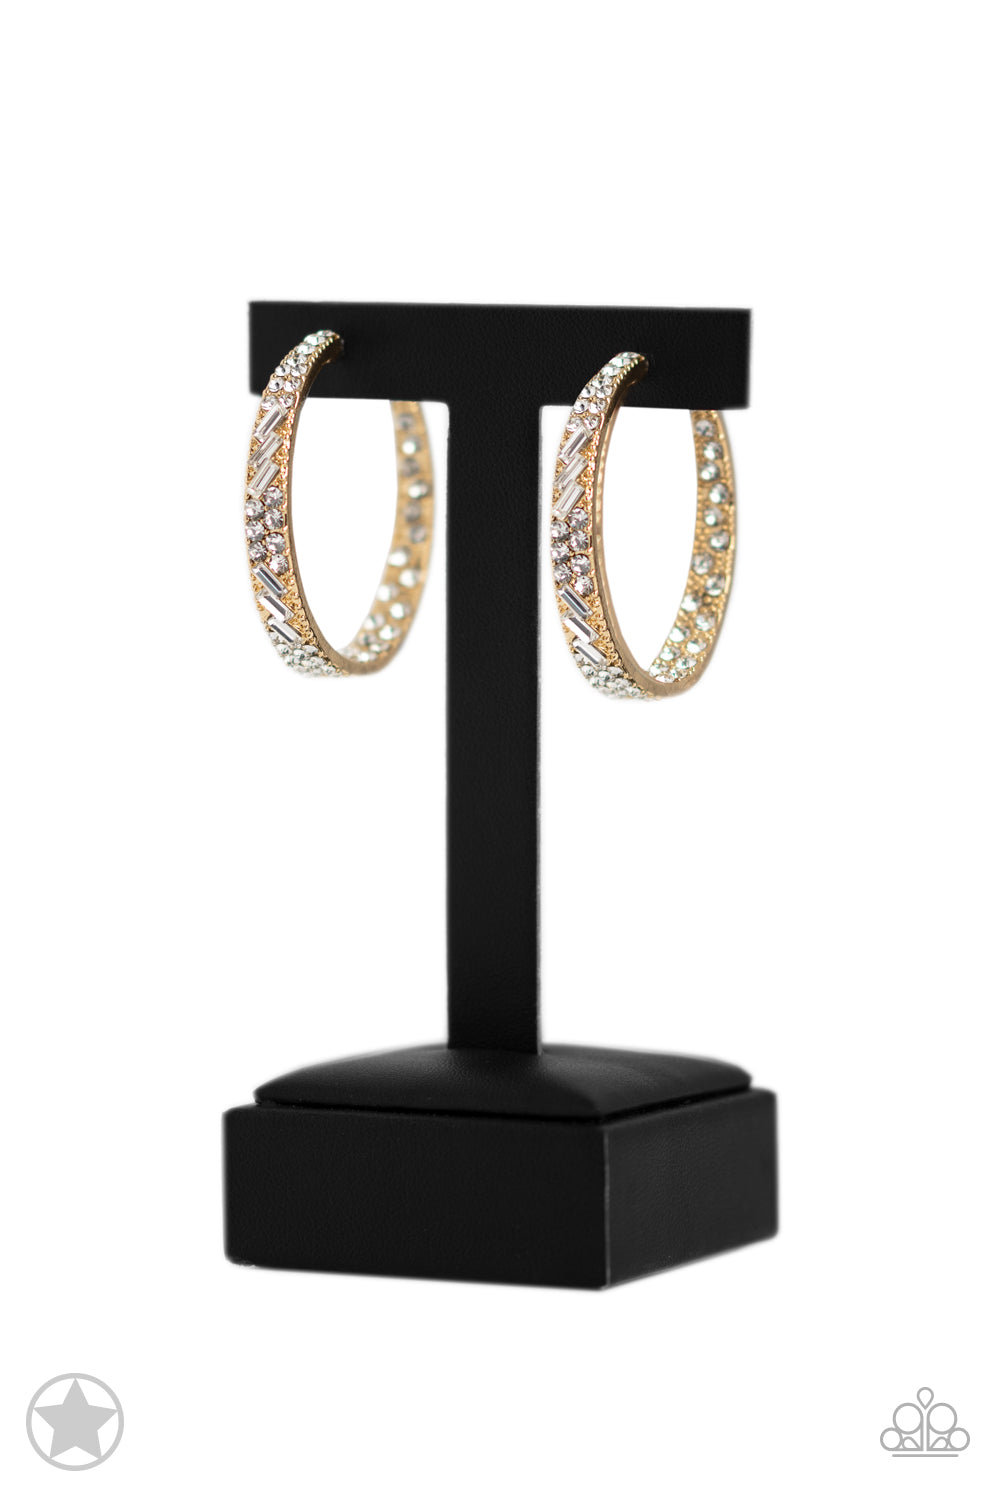 GLITZY By Association - gold - Paparazzi earrings